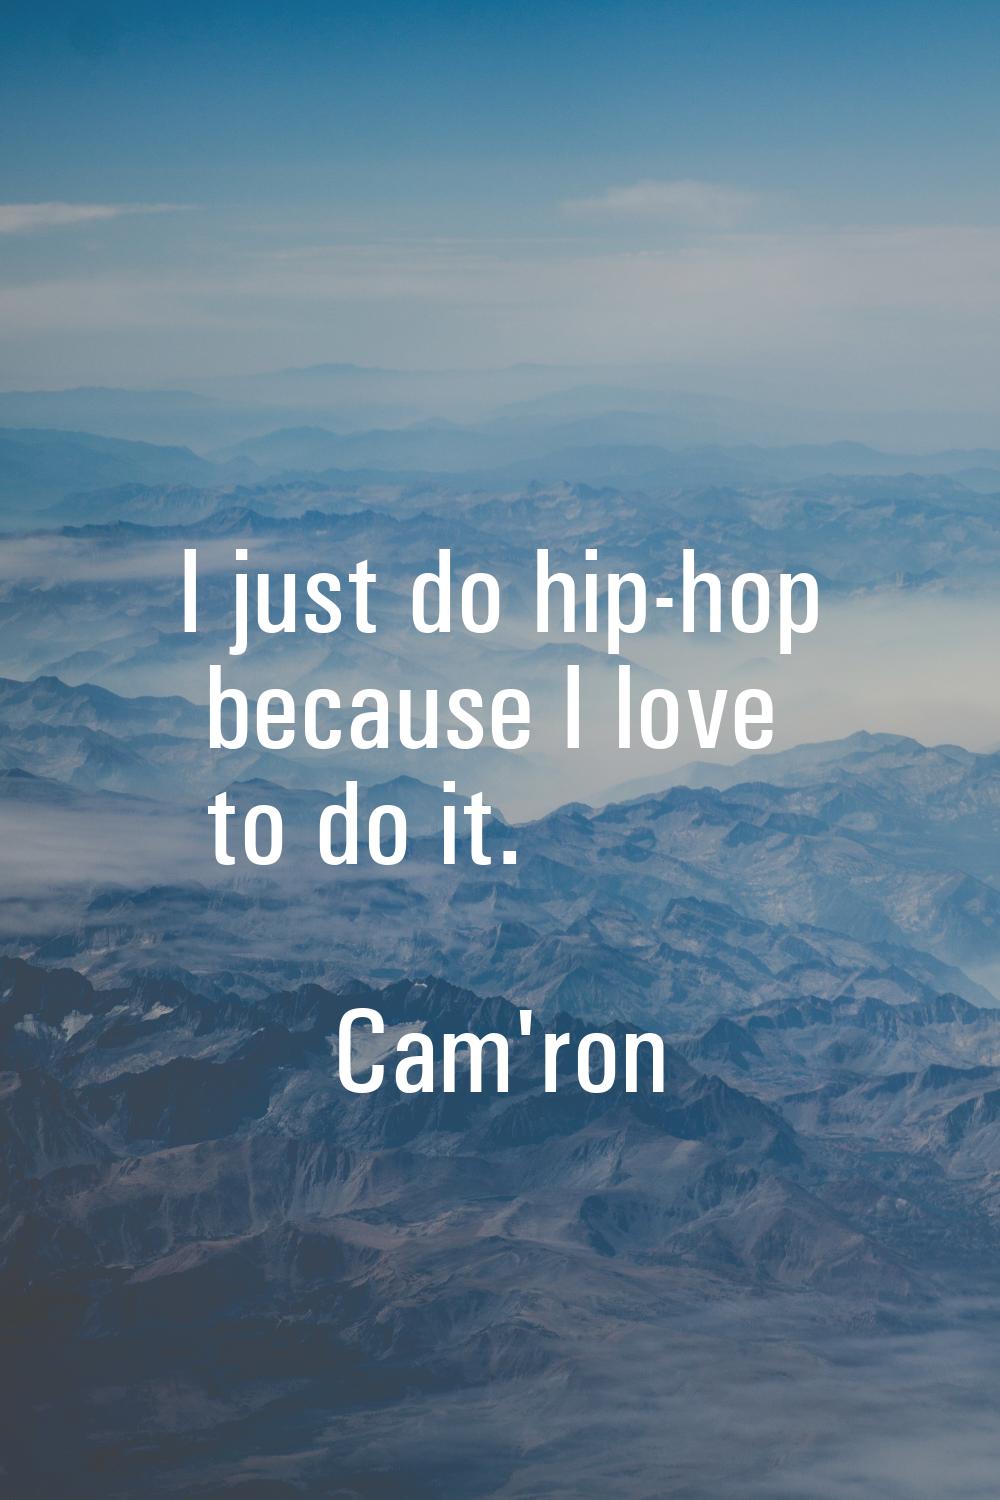 I just do hip-hop because I love to do it.